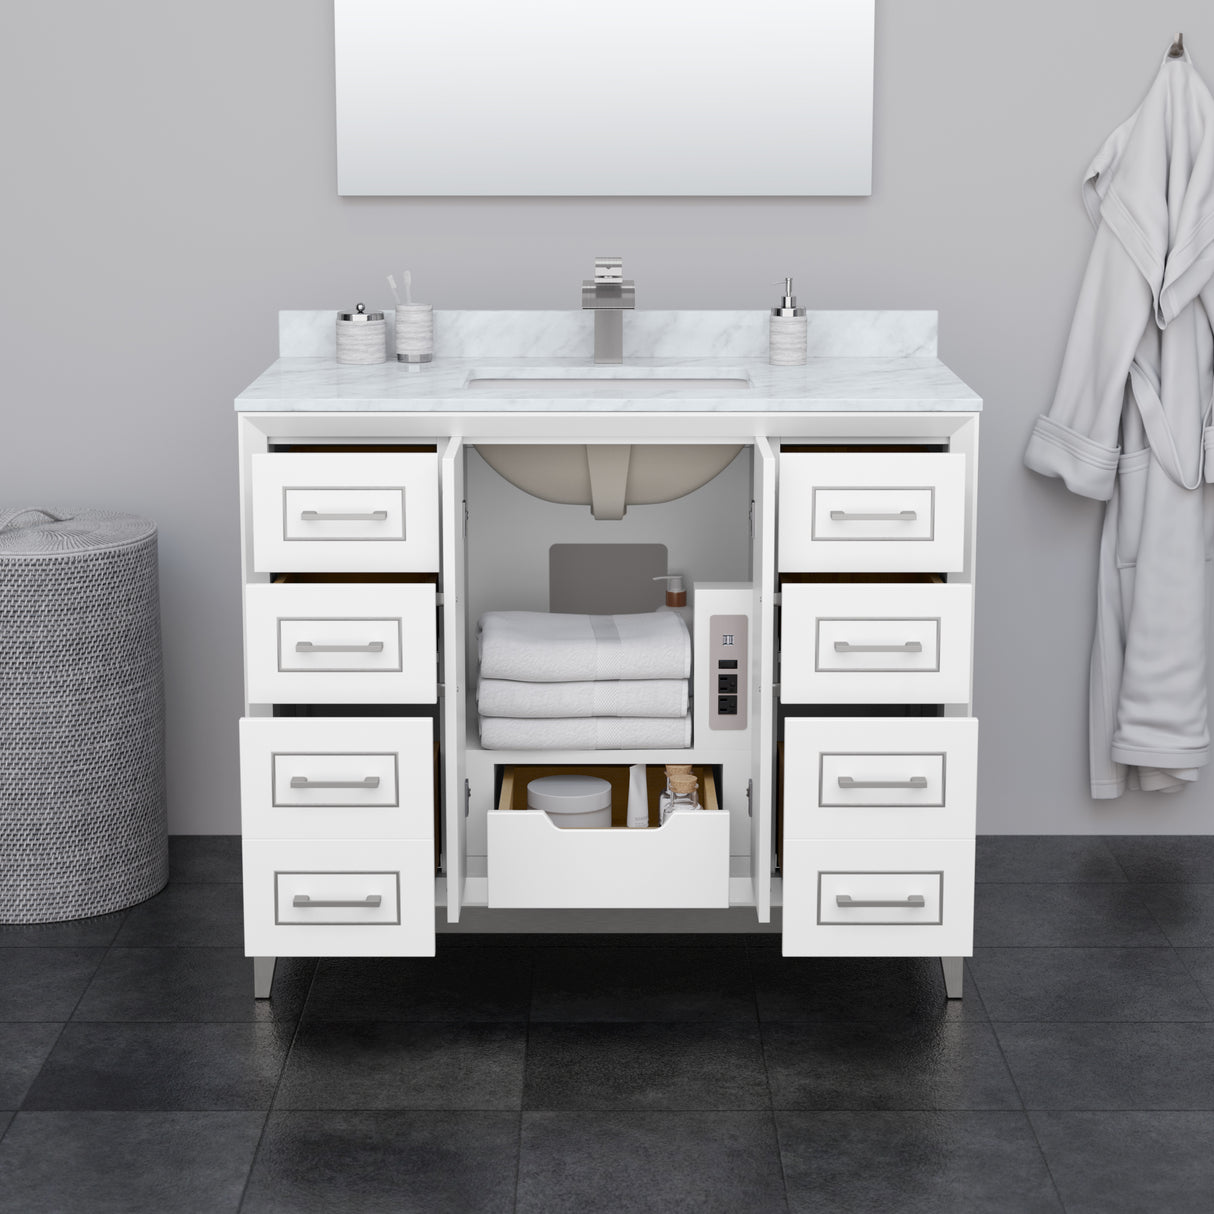 Marlena 42 Inch Single Bathroom Vanity in White Carrara Cultured Marble Countertop Undermount Square Sink Brushed Nickel Trim